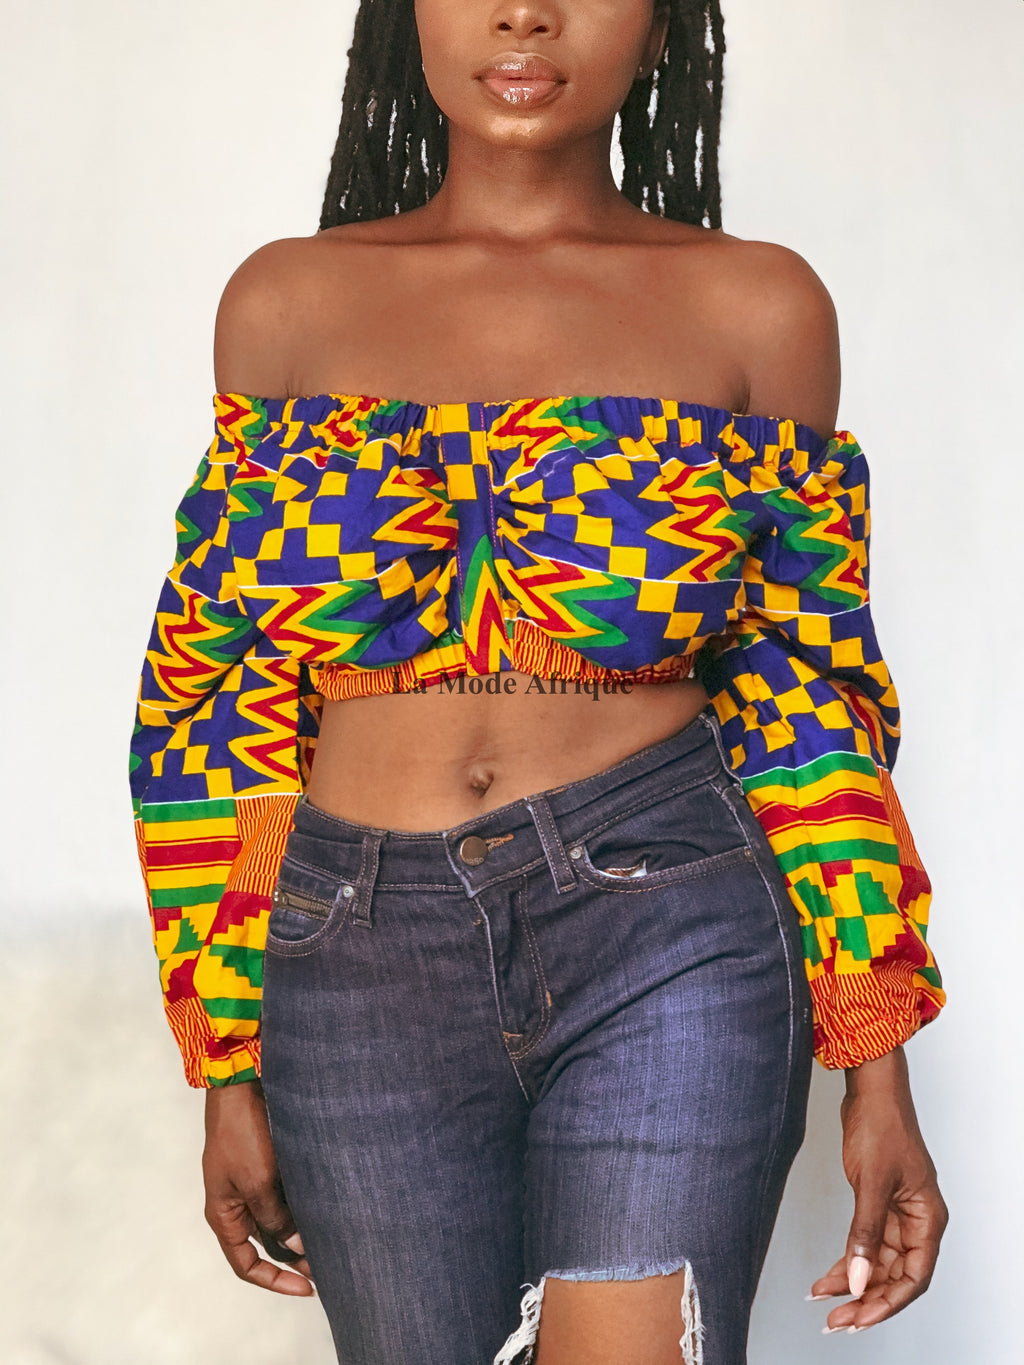 La Mode Afrique - Ankara corset belt x Ankara obi wrap Available as seen  Price : 20 cedis To purchase WhatsApp: 0540651743